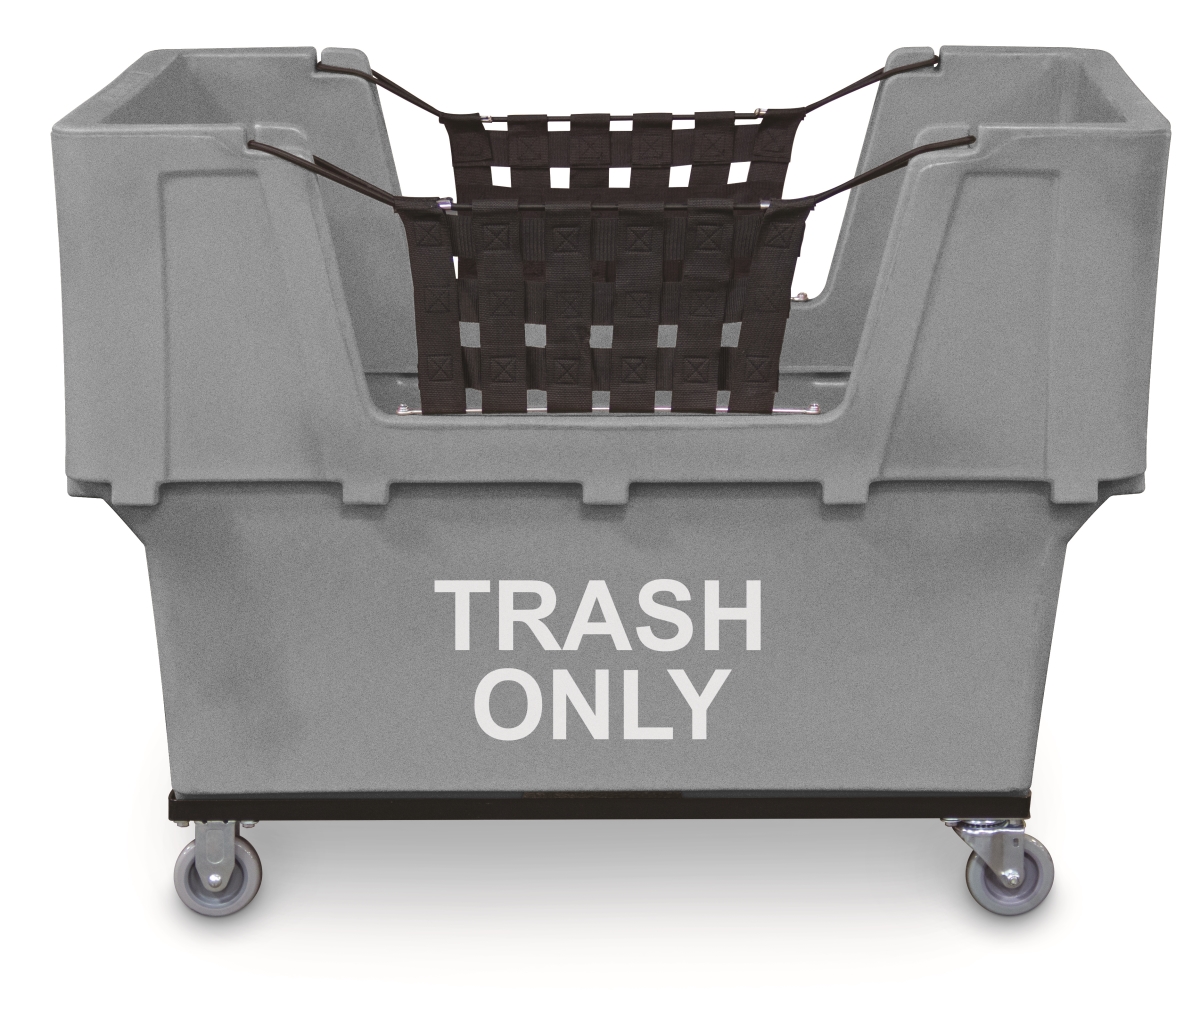 UNITED VISUAL PRODUCTS N1017261-GRANIT-TRASH Granite Trash Only Imprinted Plastic Basket Truck